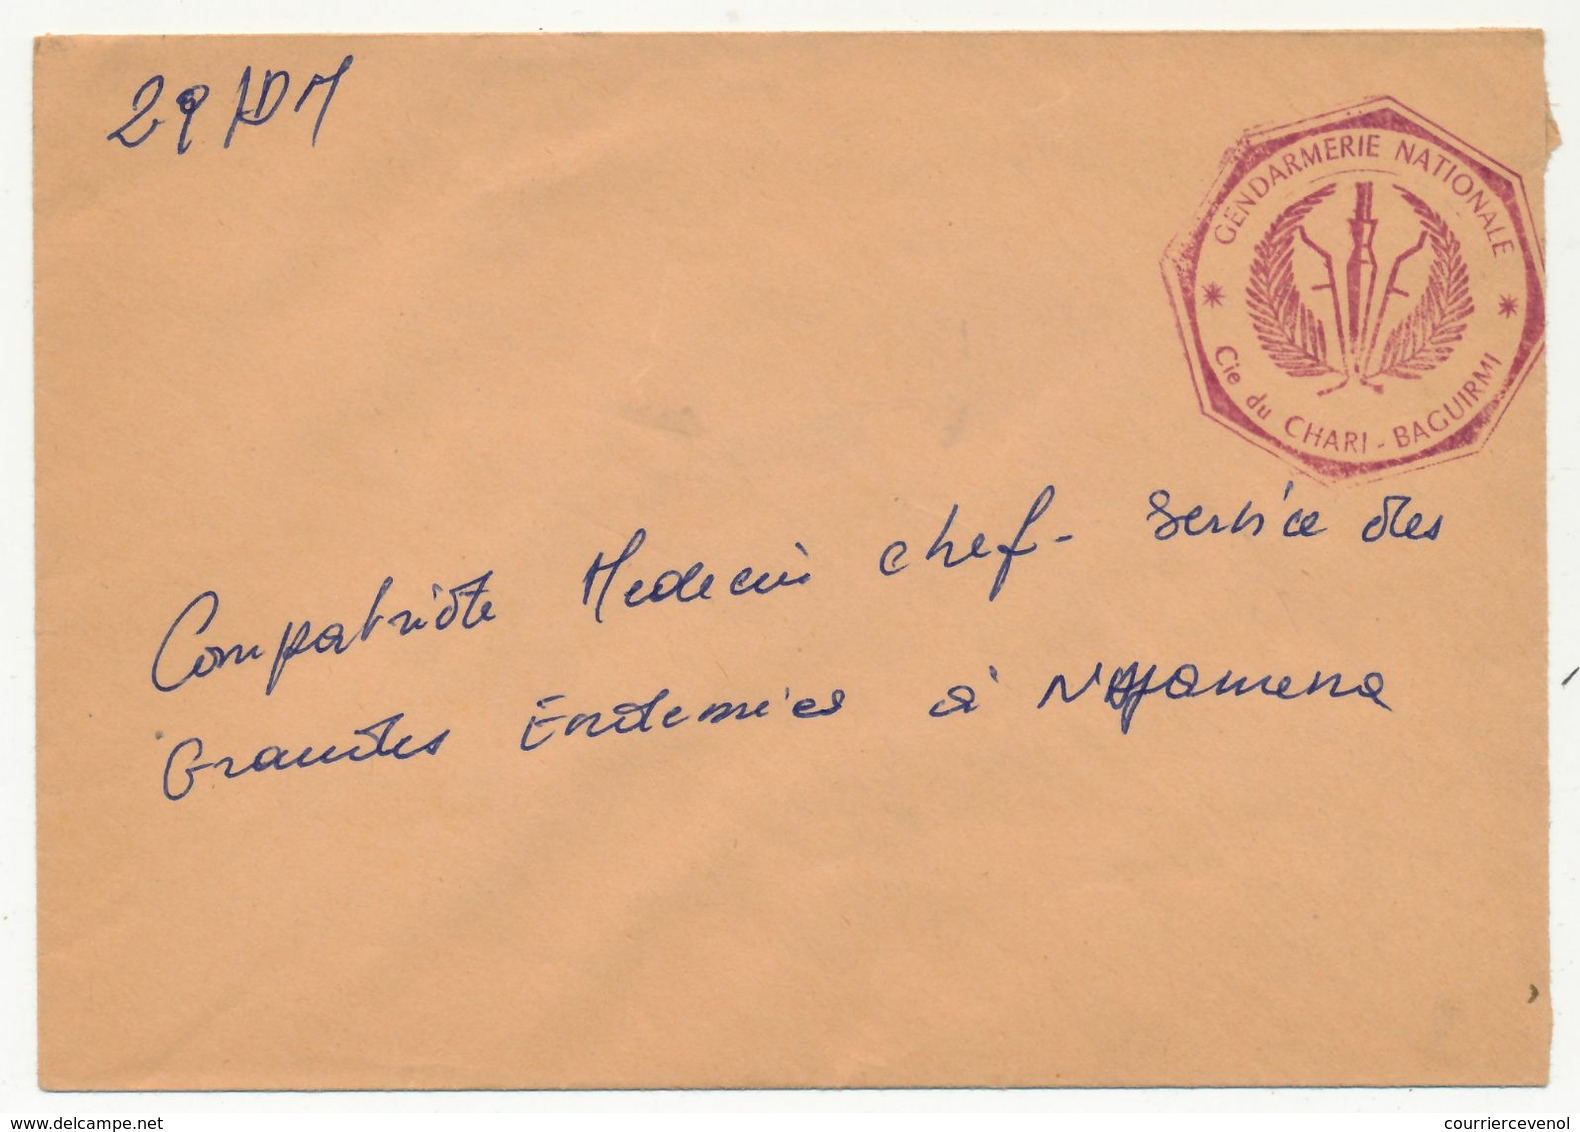 TCHAD - 2 Enveloppes En Franchise - Gendarmerie Nationale - Commandement + Cie Du Chari-Baguirami - Tchad (1960-...)